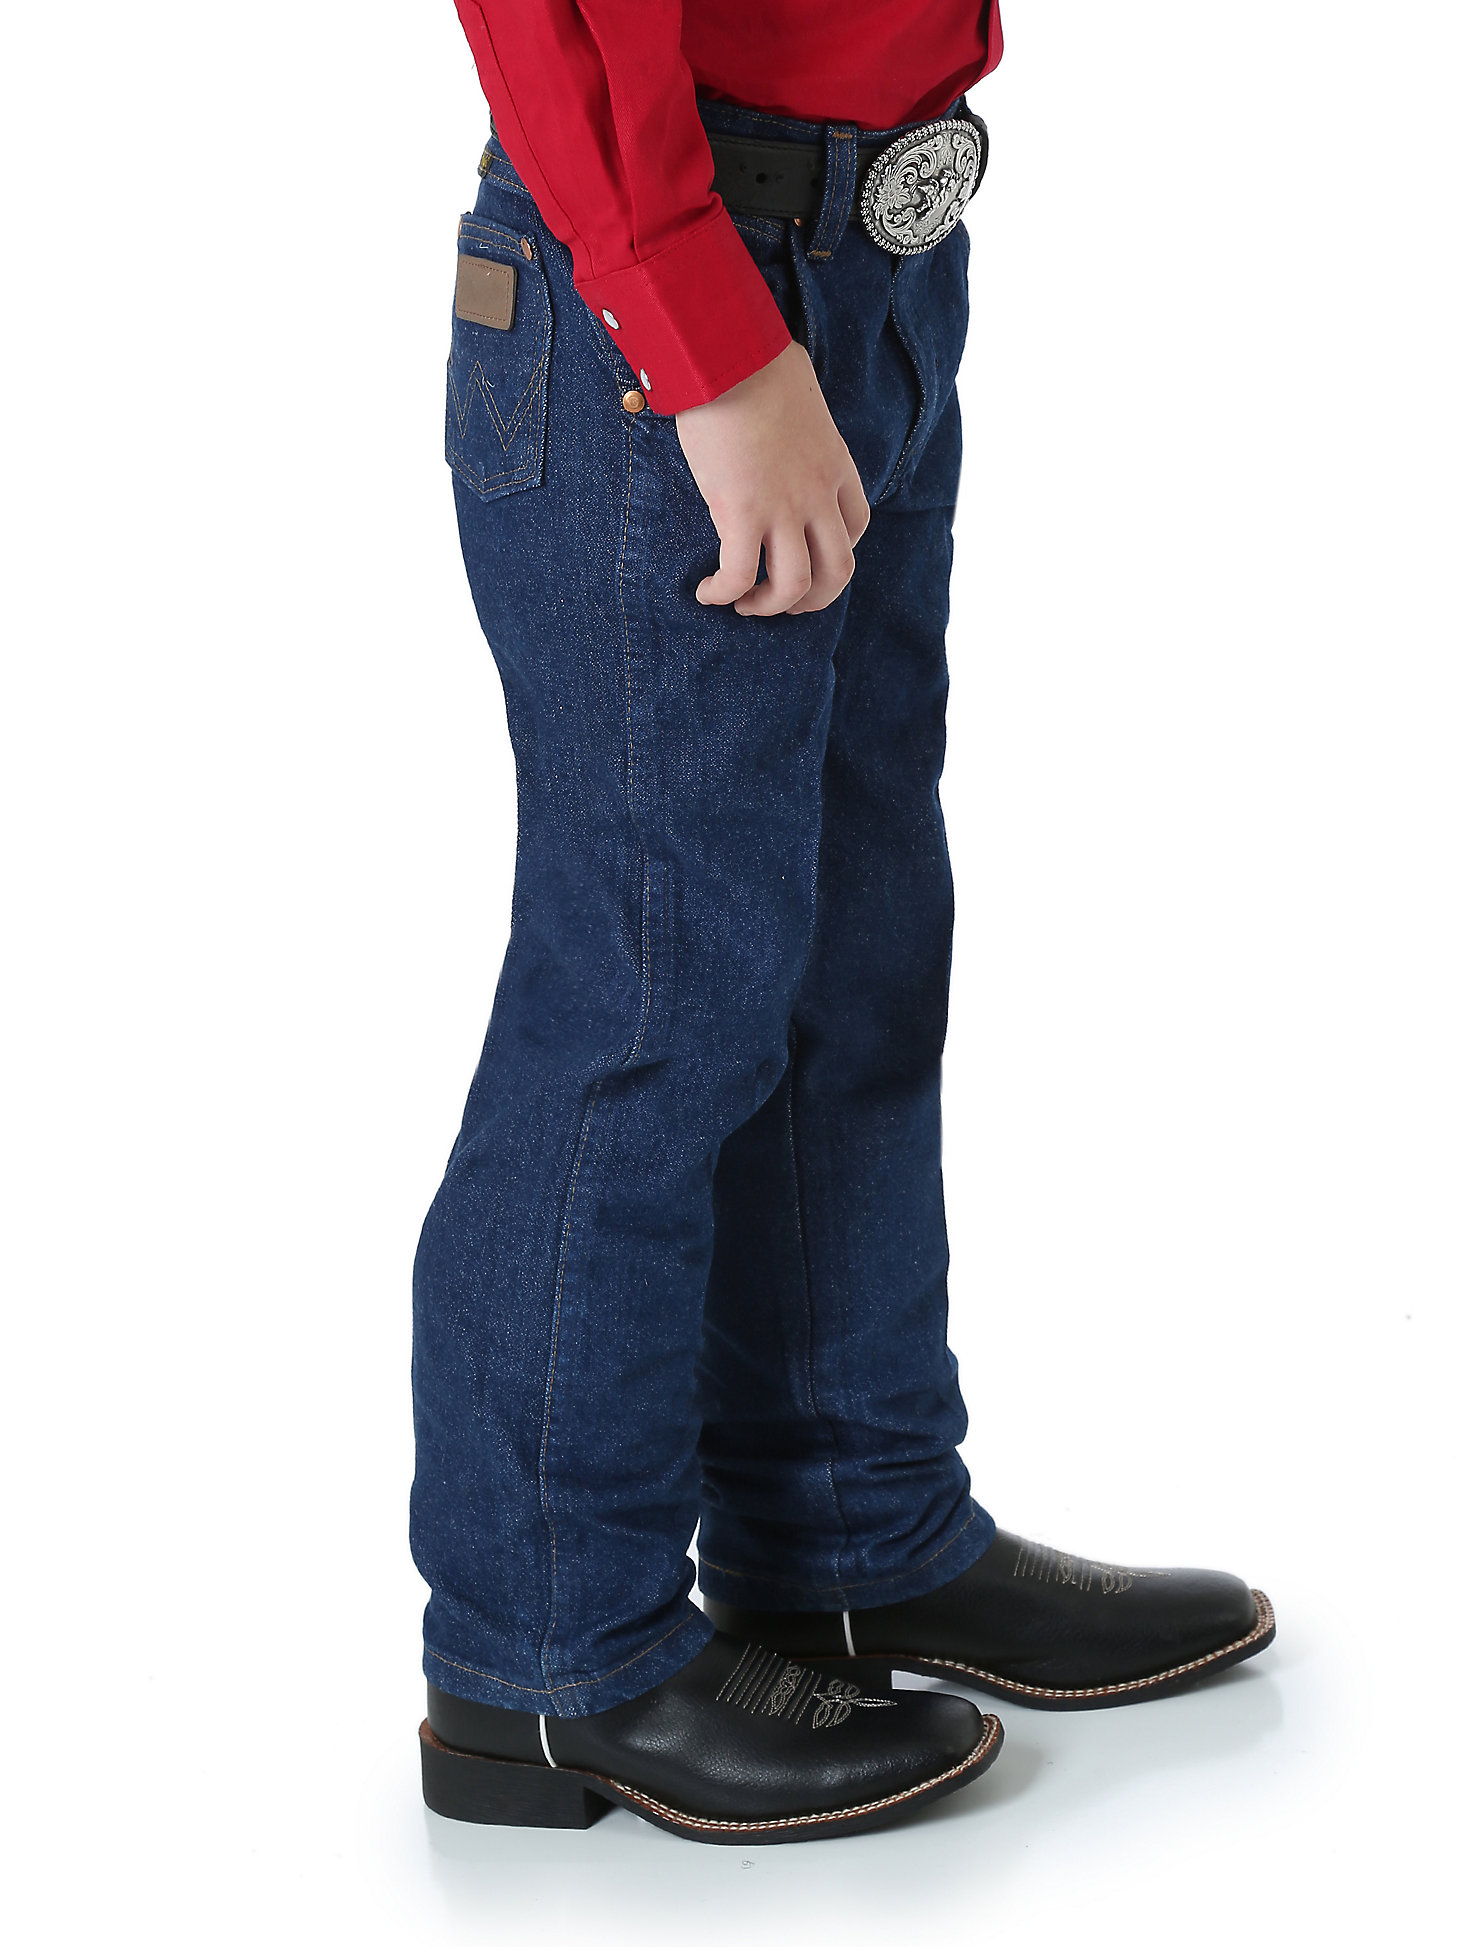 Toddler Boy's Cowboy Cut® Original Fit Jean in Prewashed Indigo alternative view 1